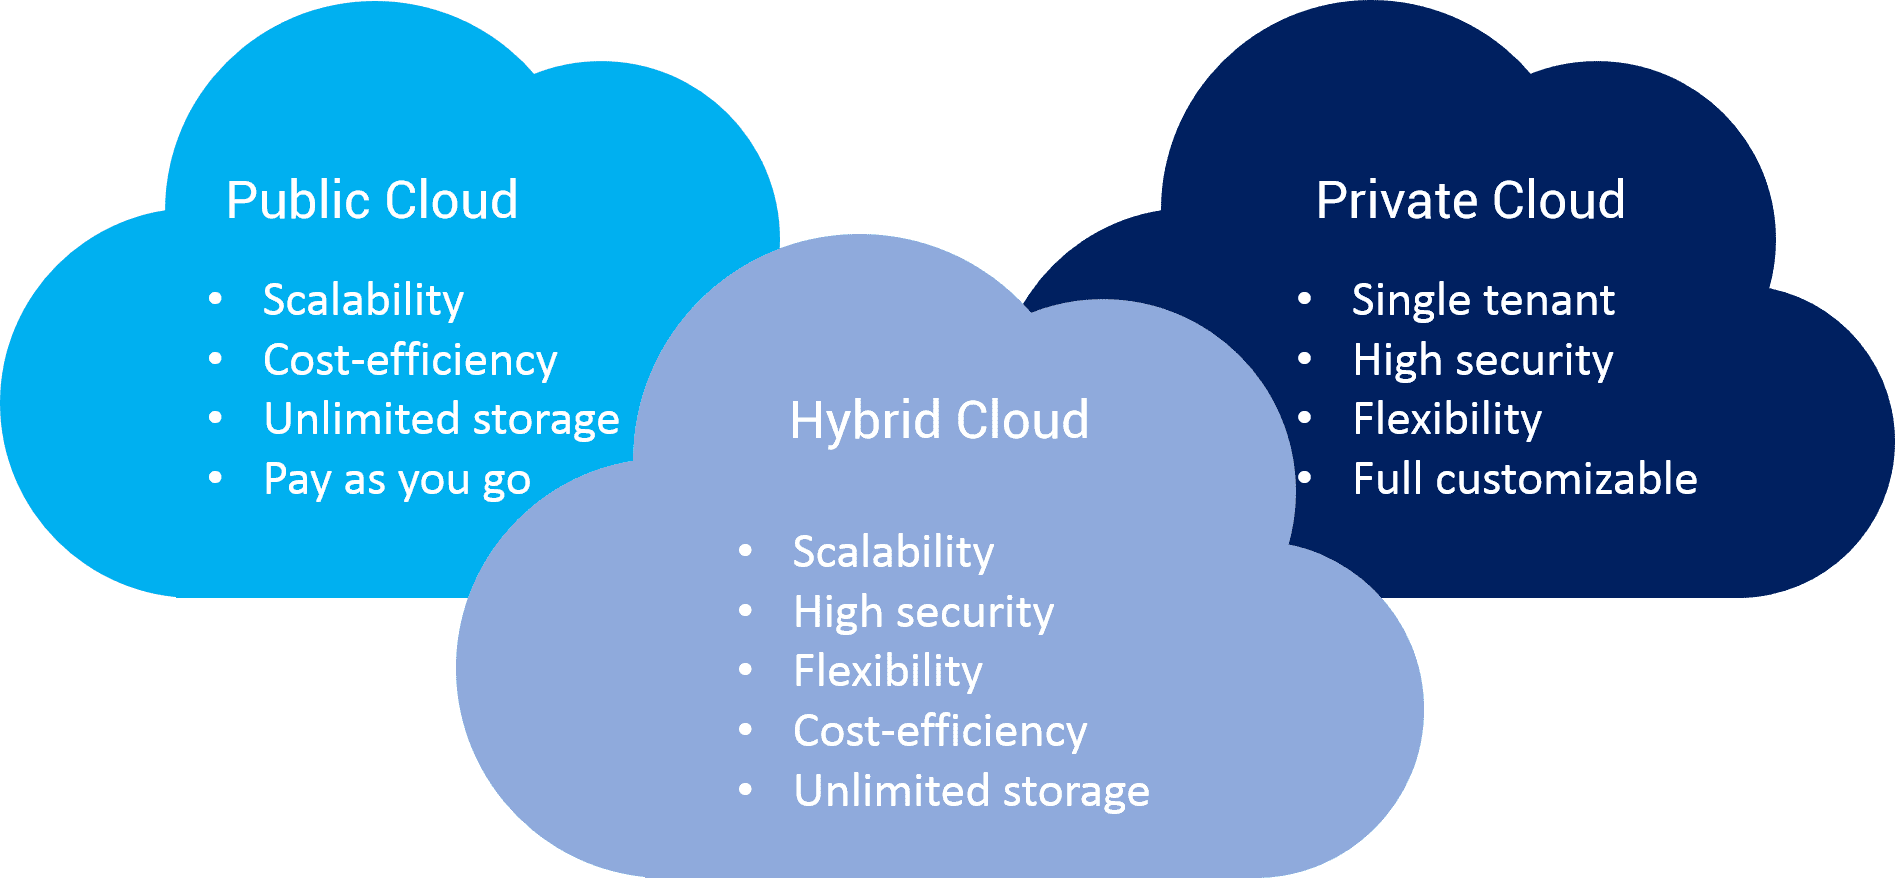 benefits of hybrid cloud